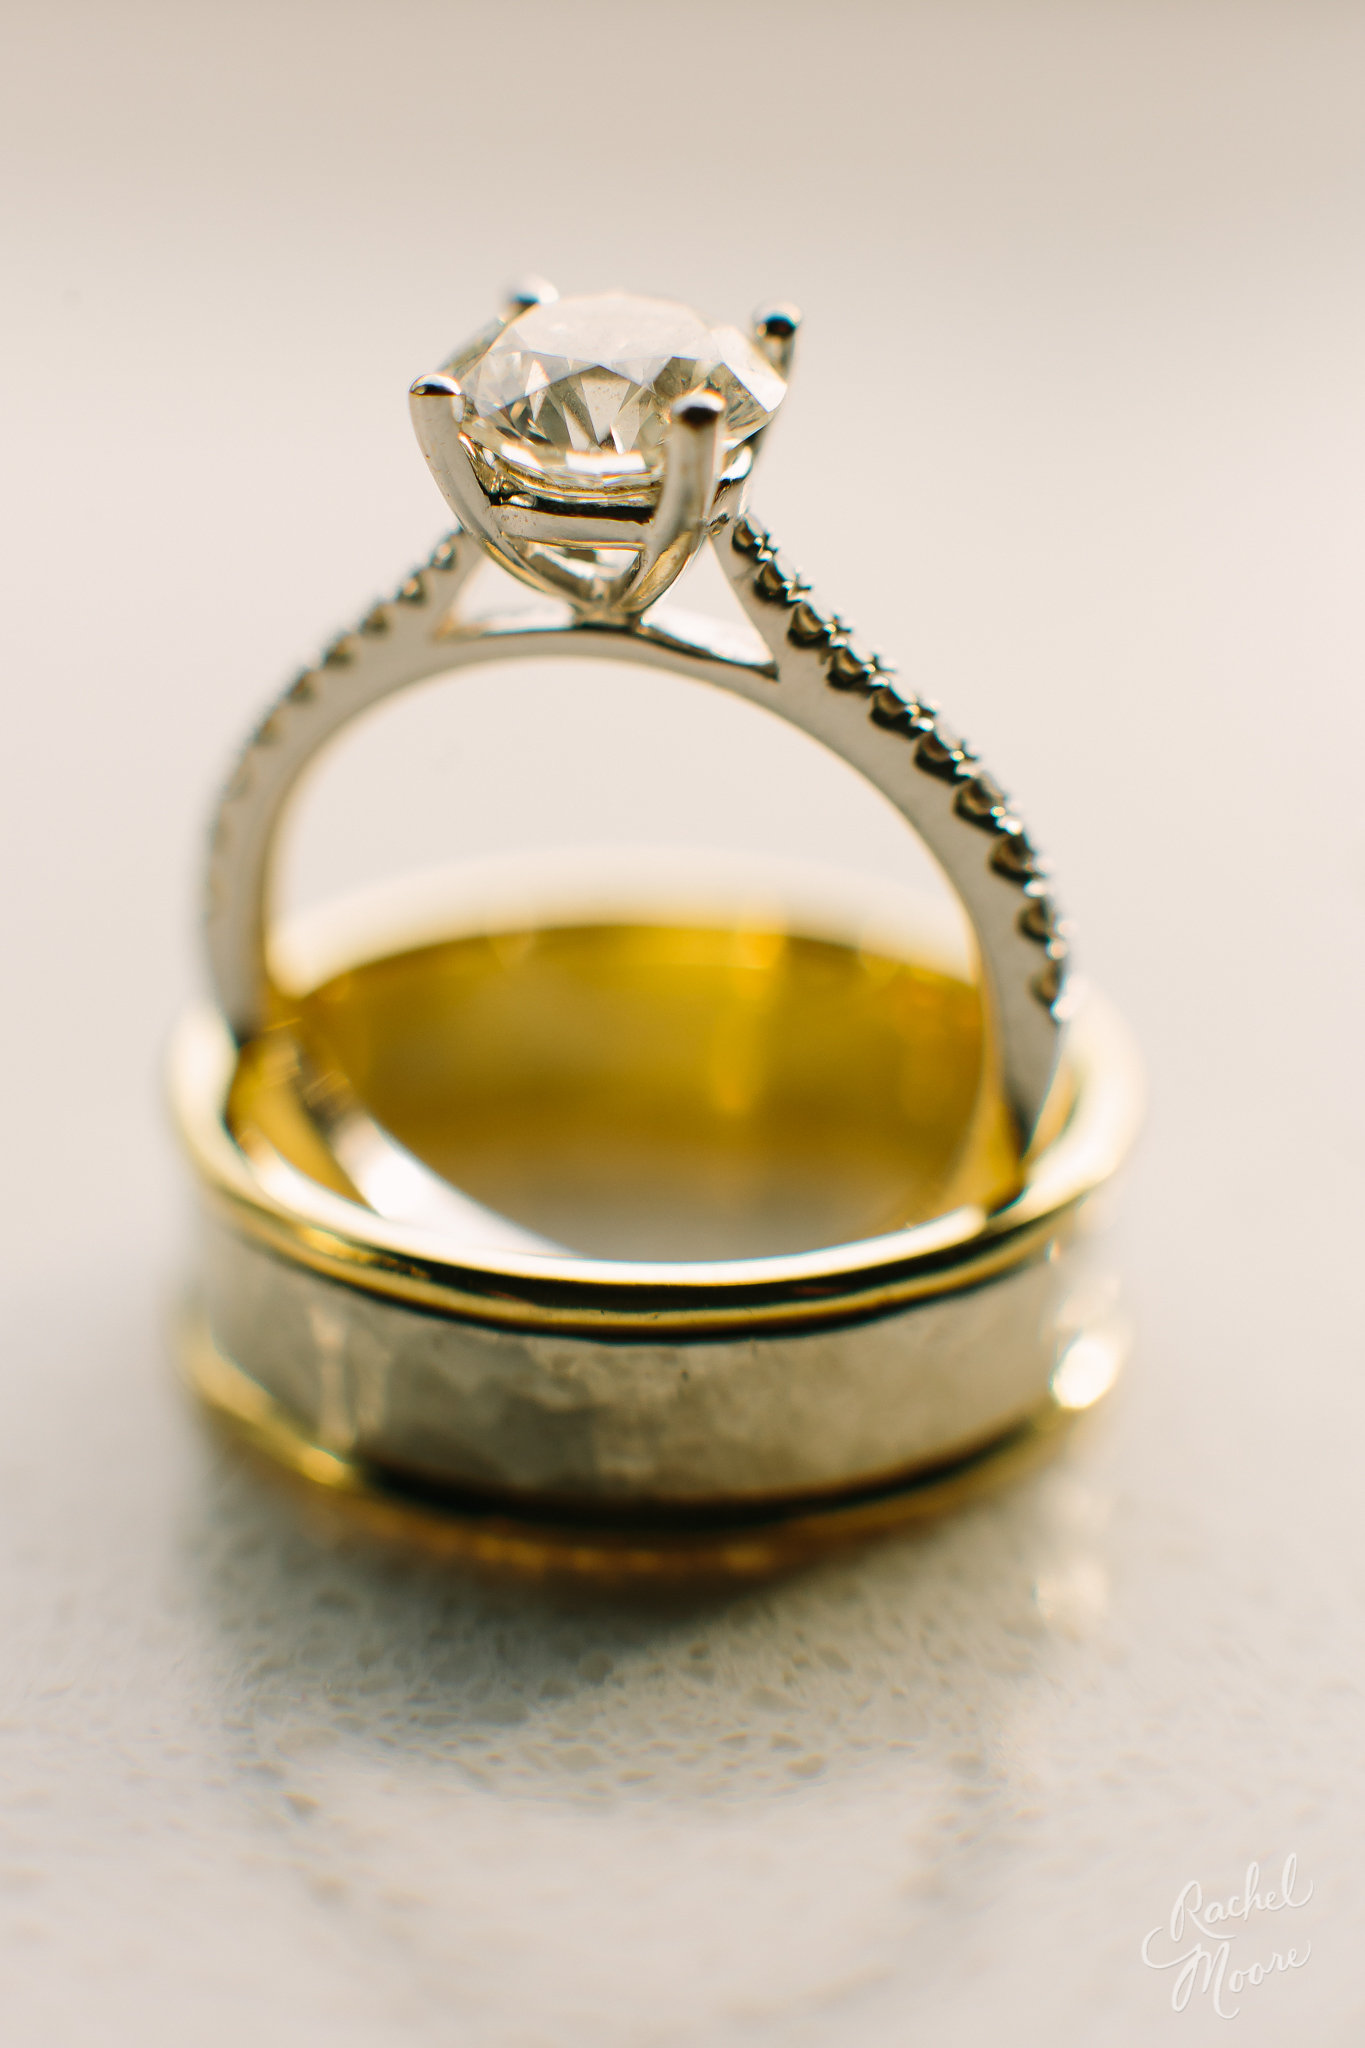 Allison's Wedding Ring